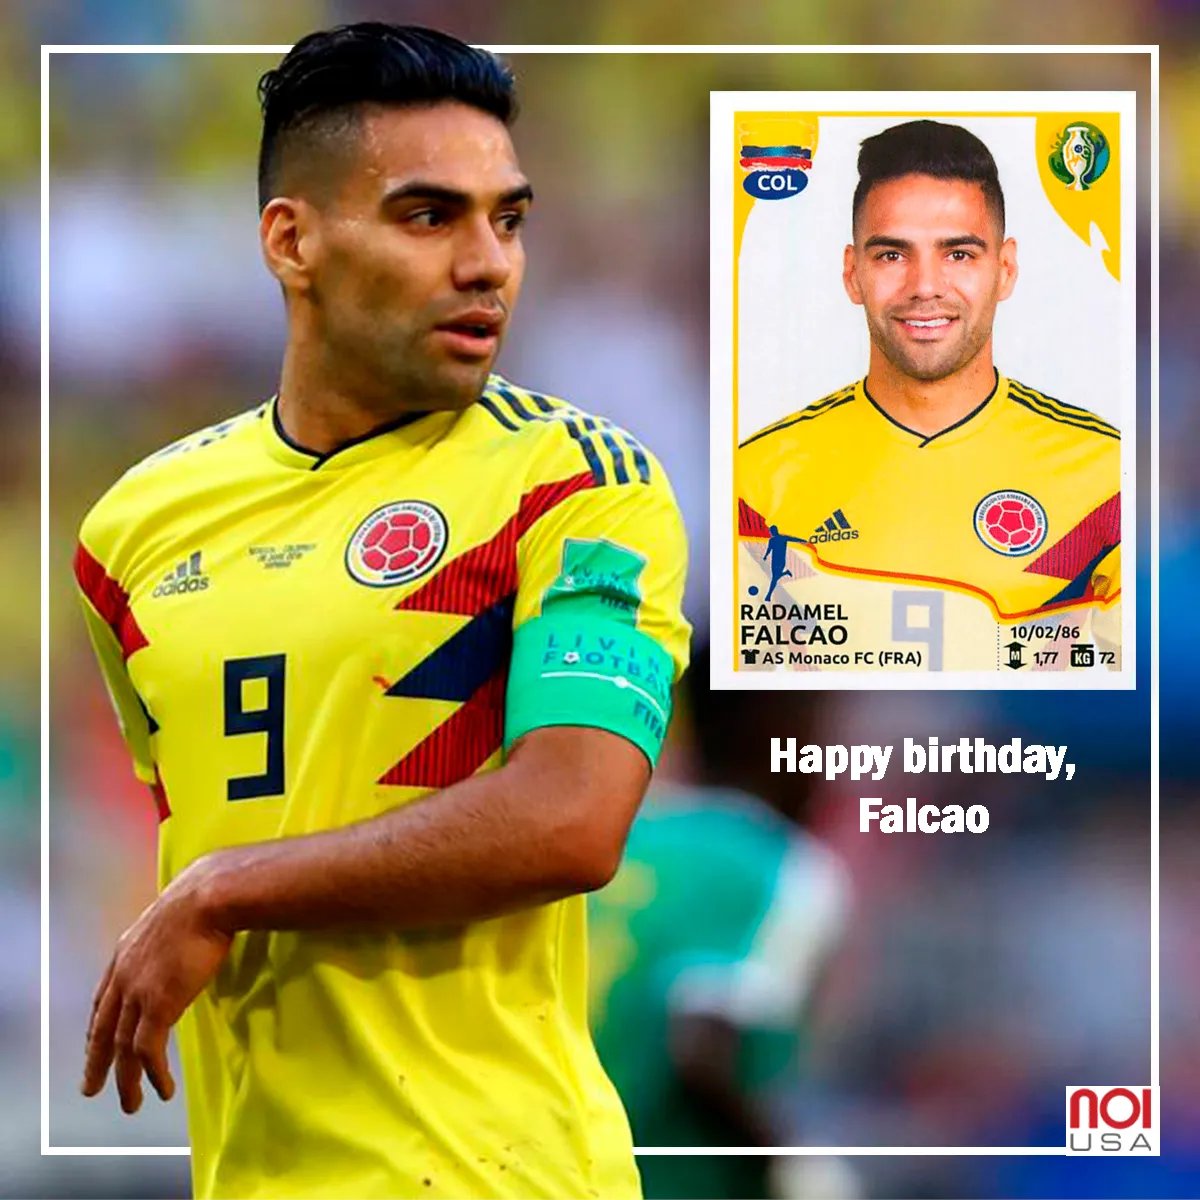 Happy birthday, Radamel Falcao!!! Orgullo colombiano!!! 